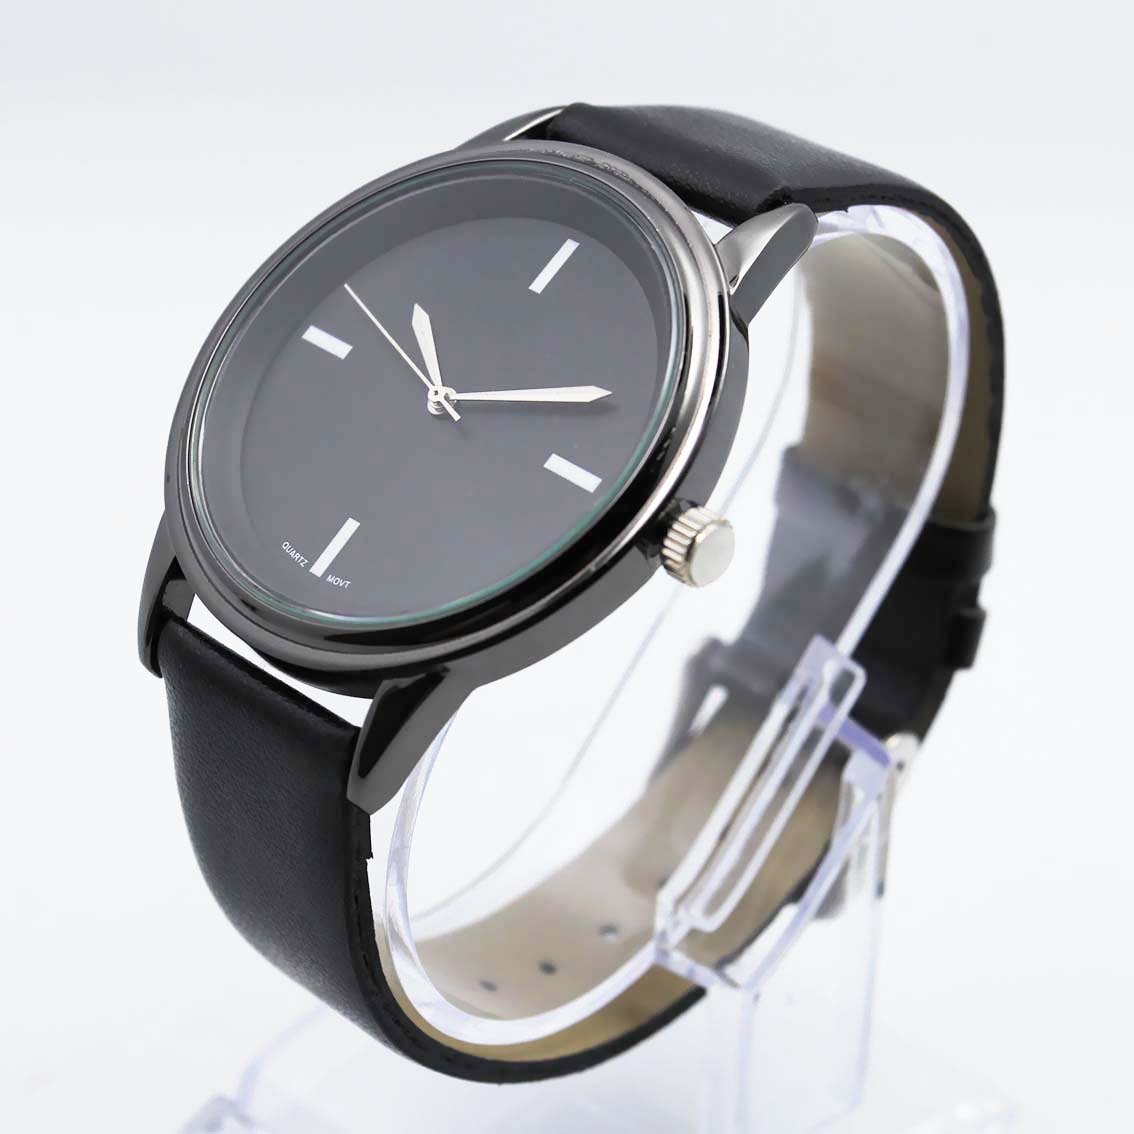 #02136Men's wristwatch quartz analog leather strap watch